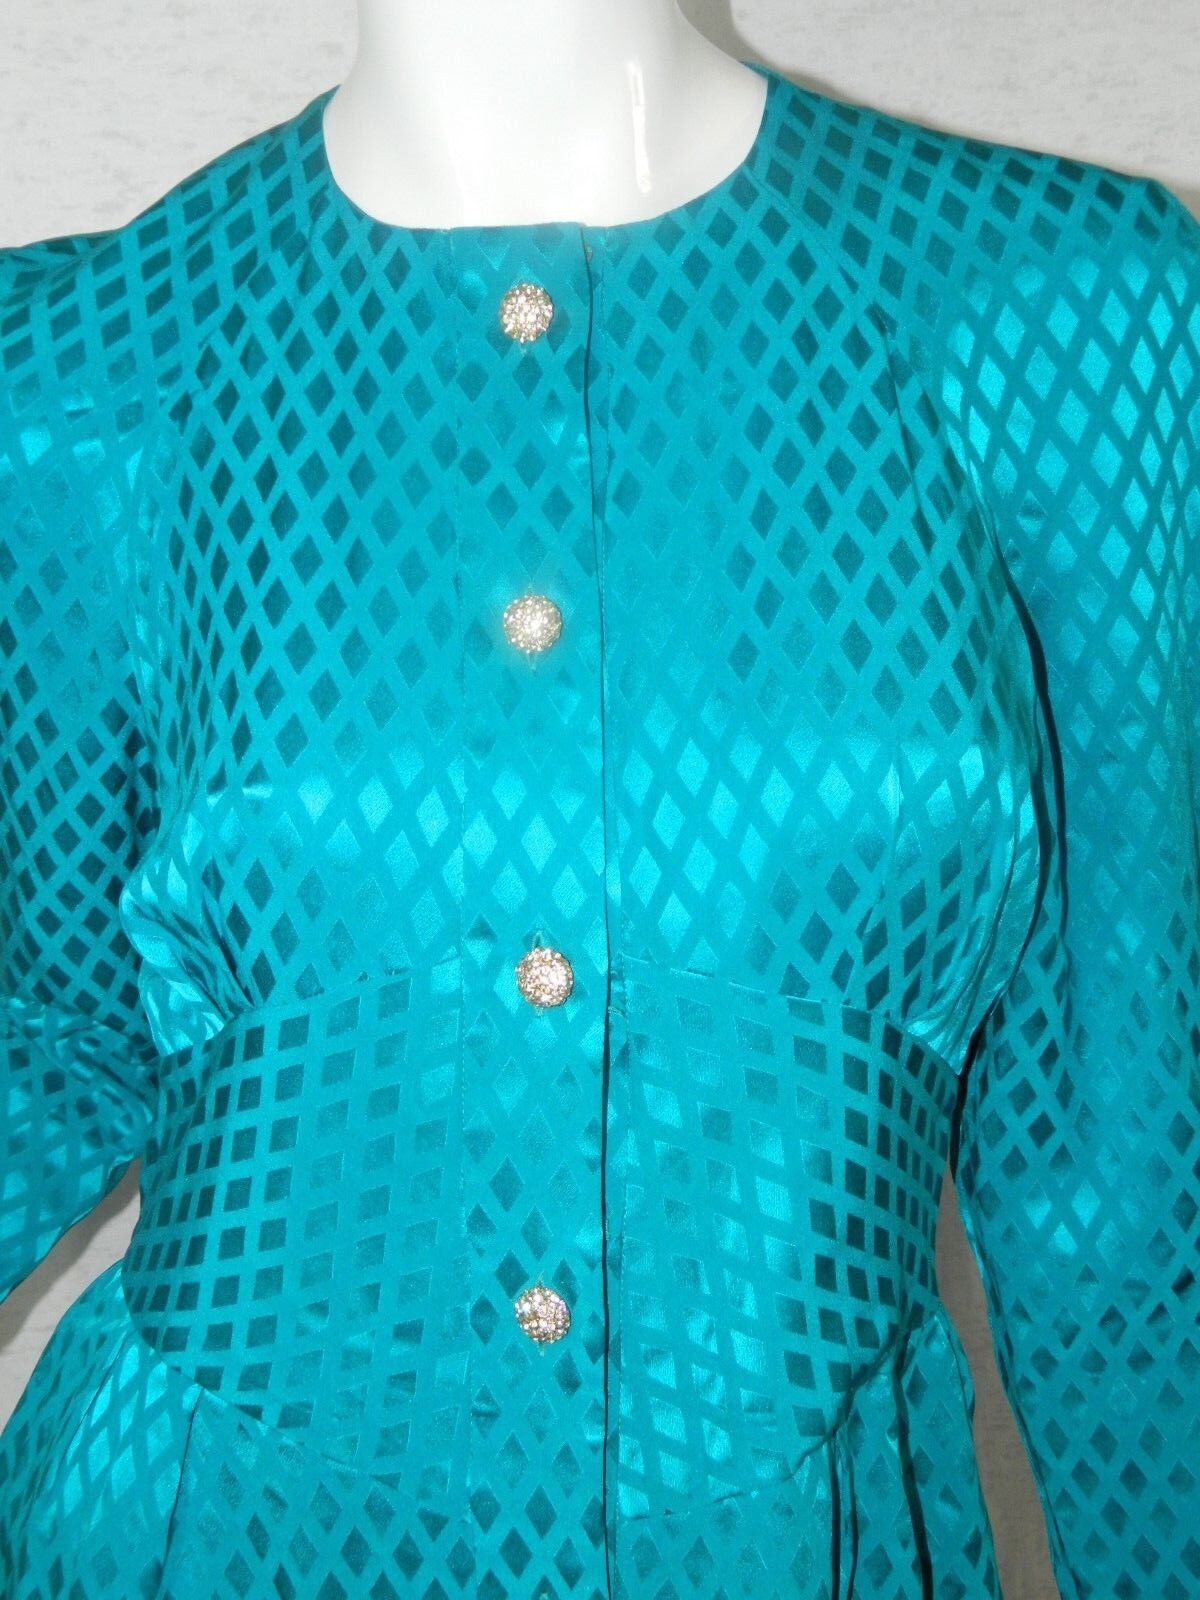 ALBERT NIPON Dress Turquoise 100% Silk Rhinestone… - image 5